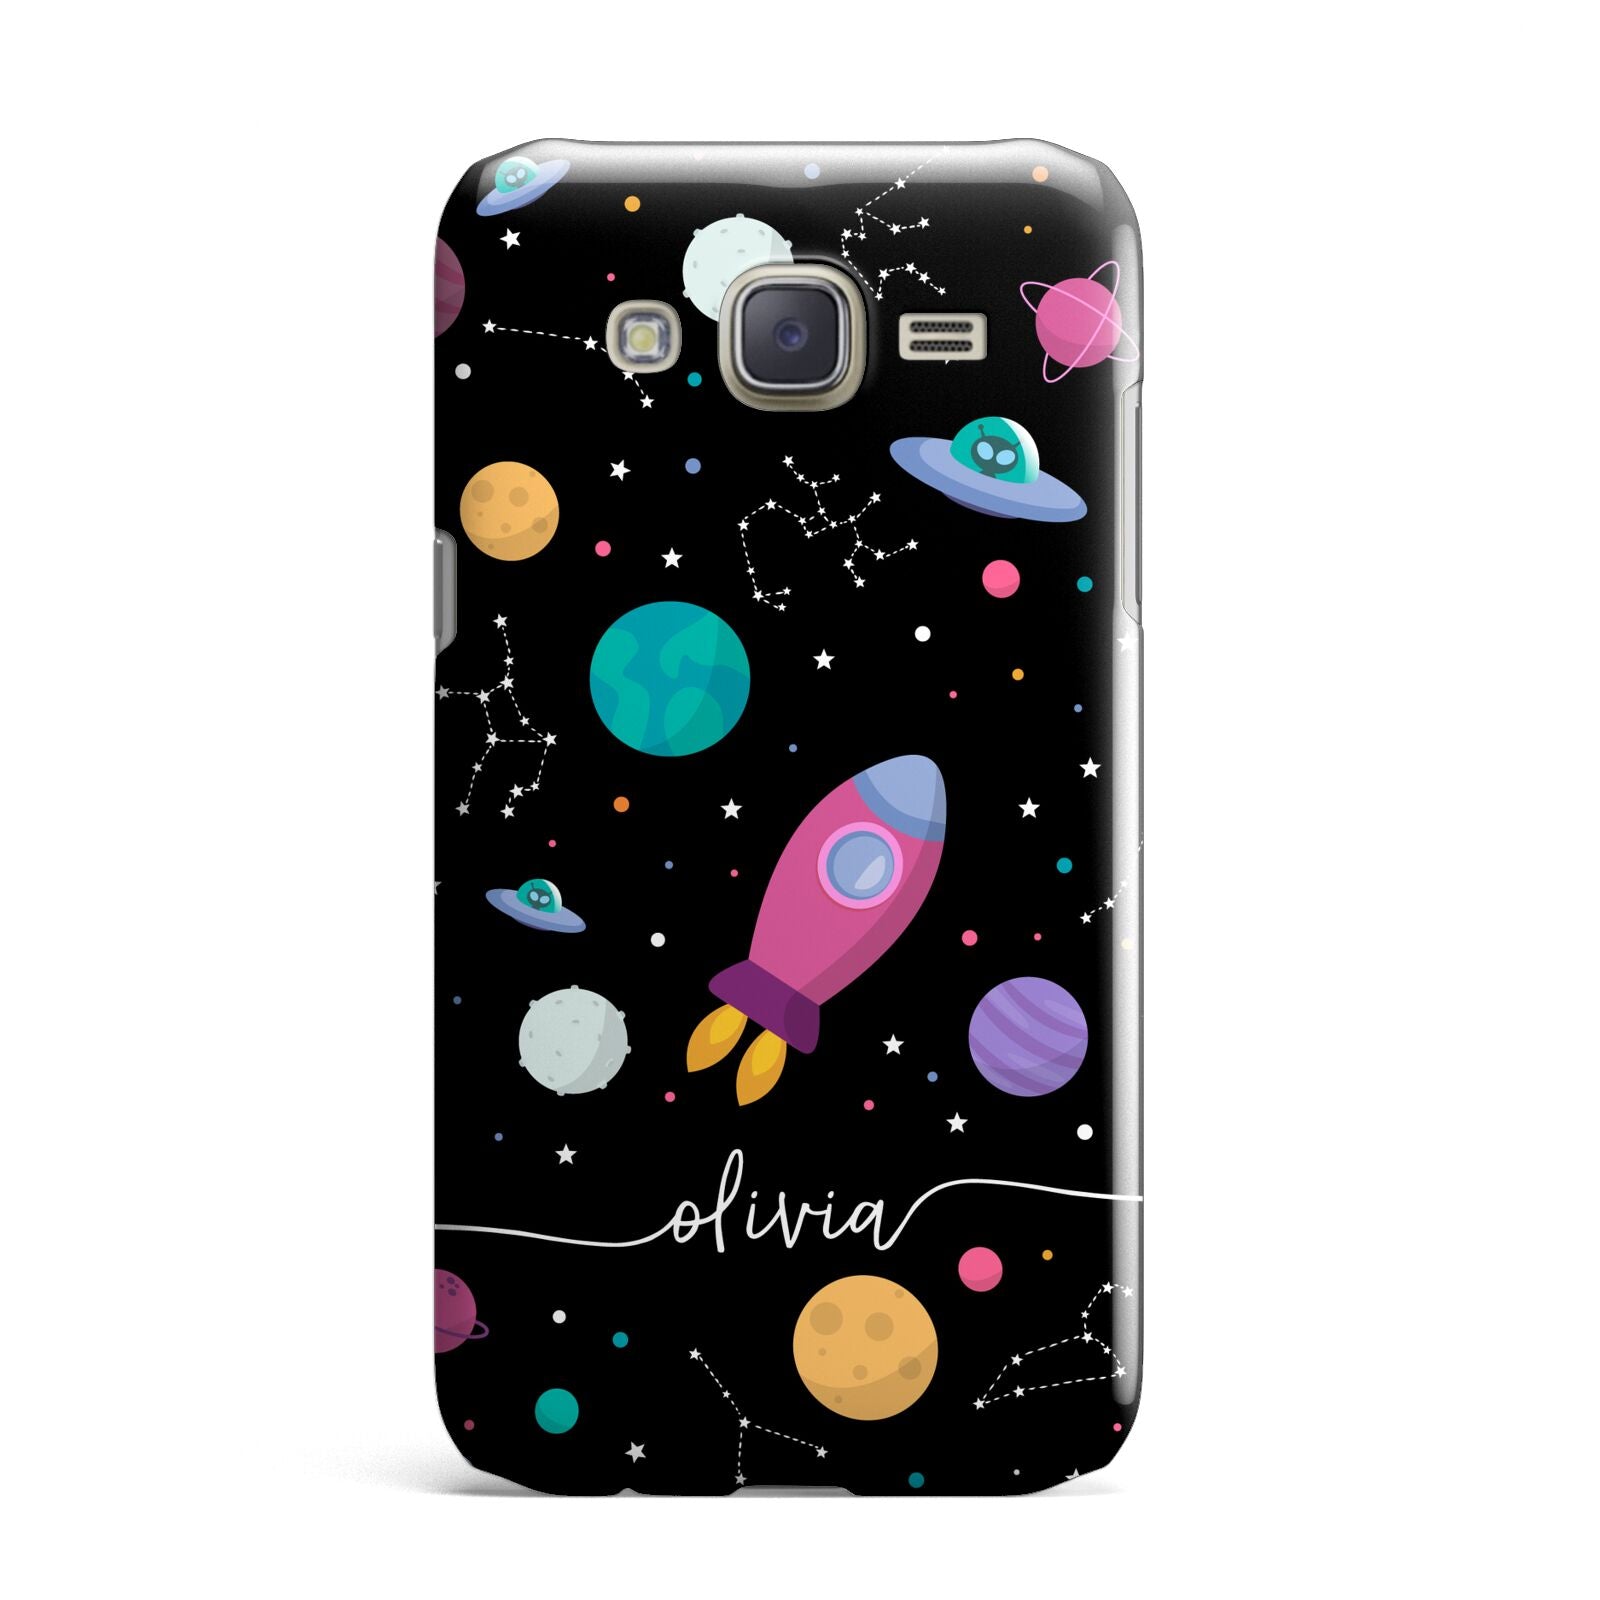 Galaxy Artwork with Name Samsung Galaxy J7 Case